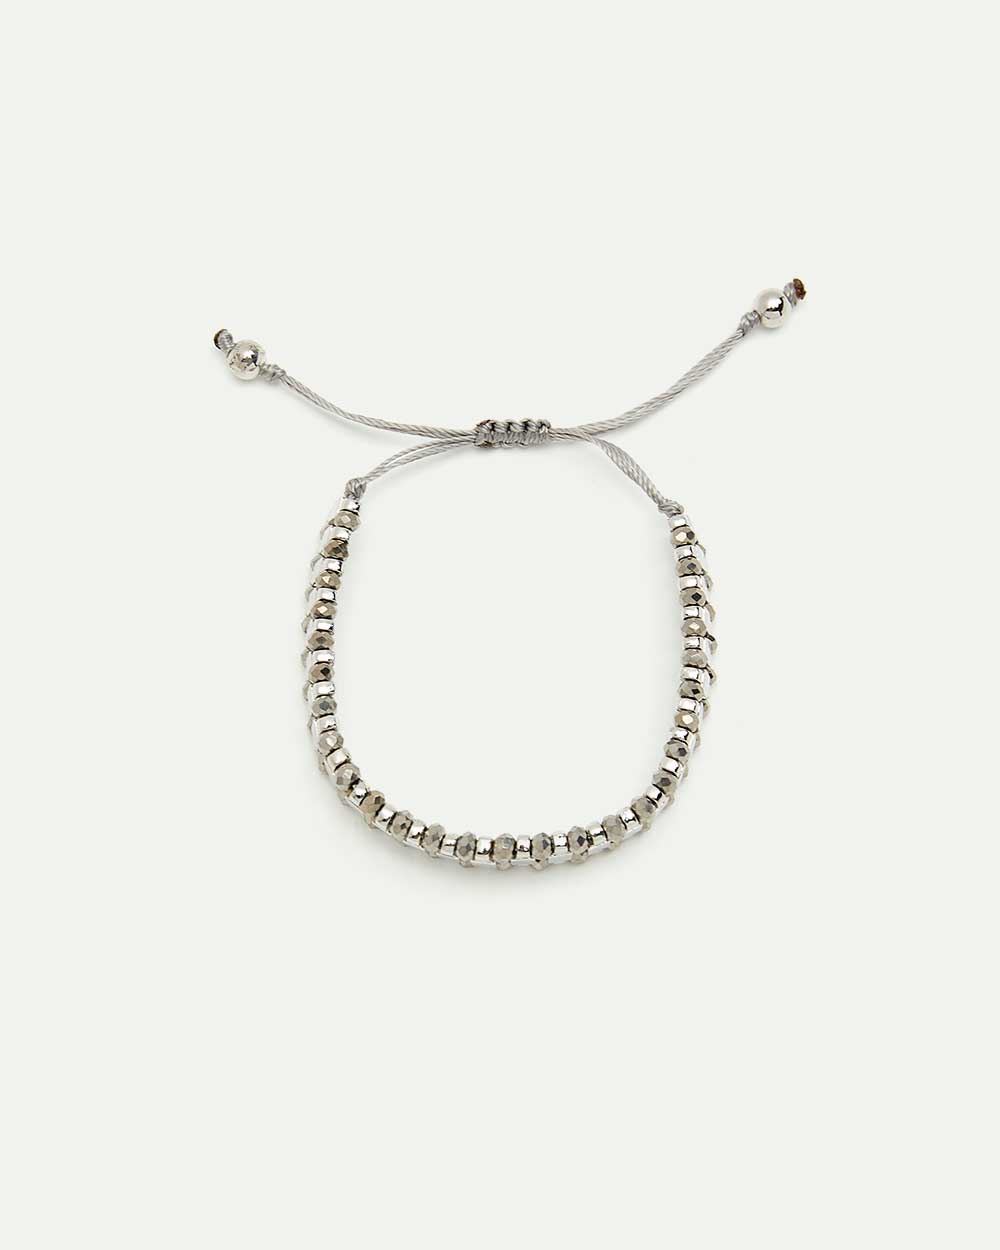 Pull Thru Bracelet with Beads